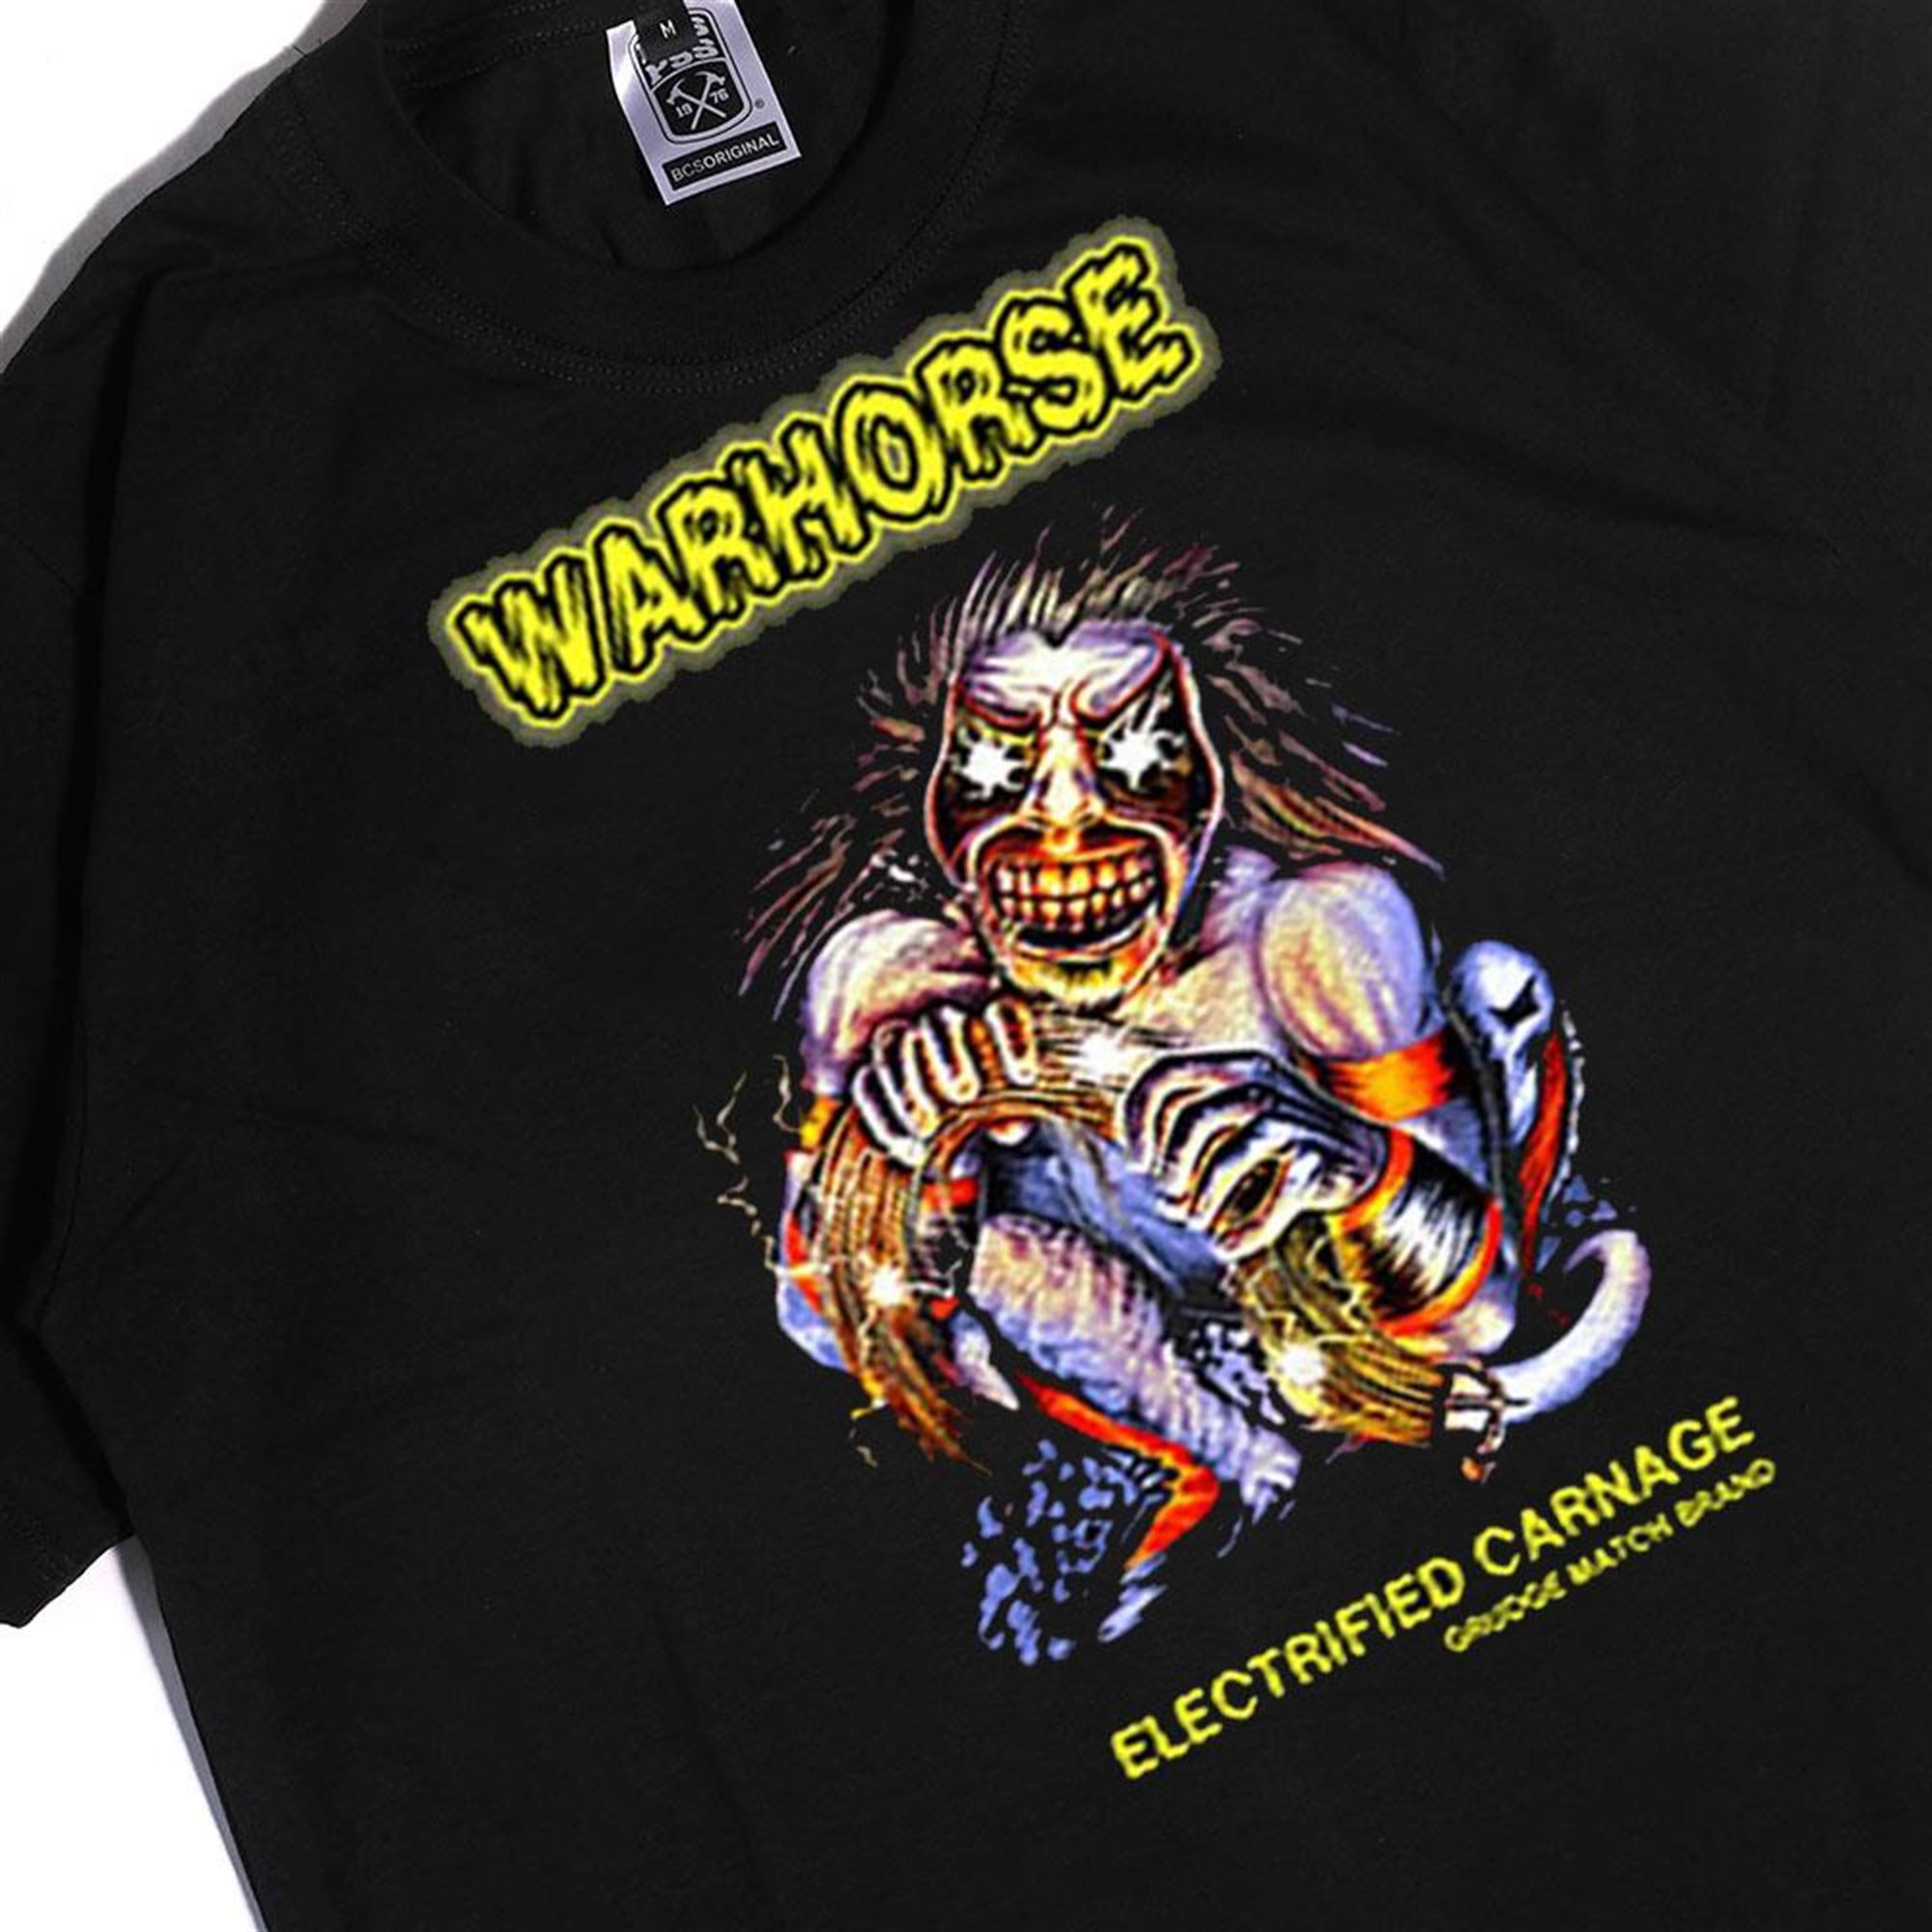 Warhorse Electrified Carnage T-shirt